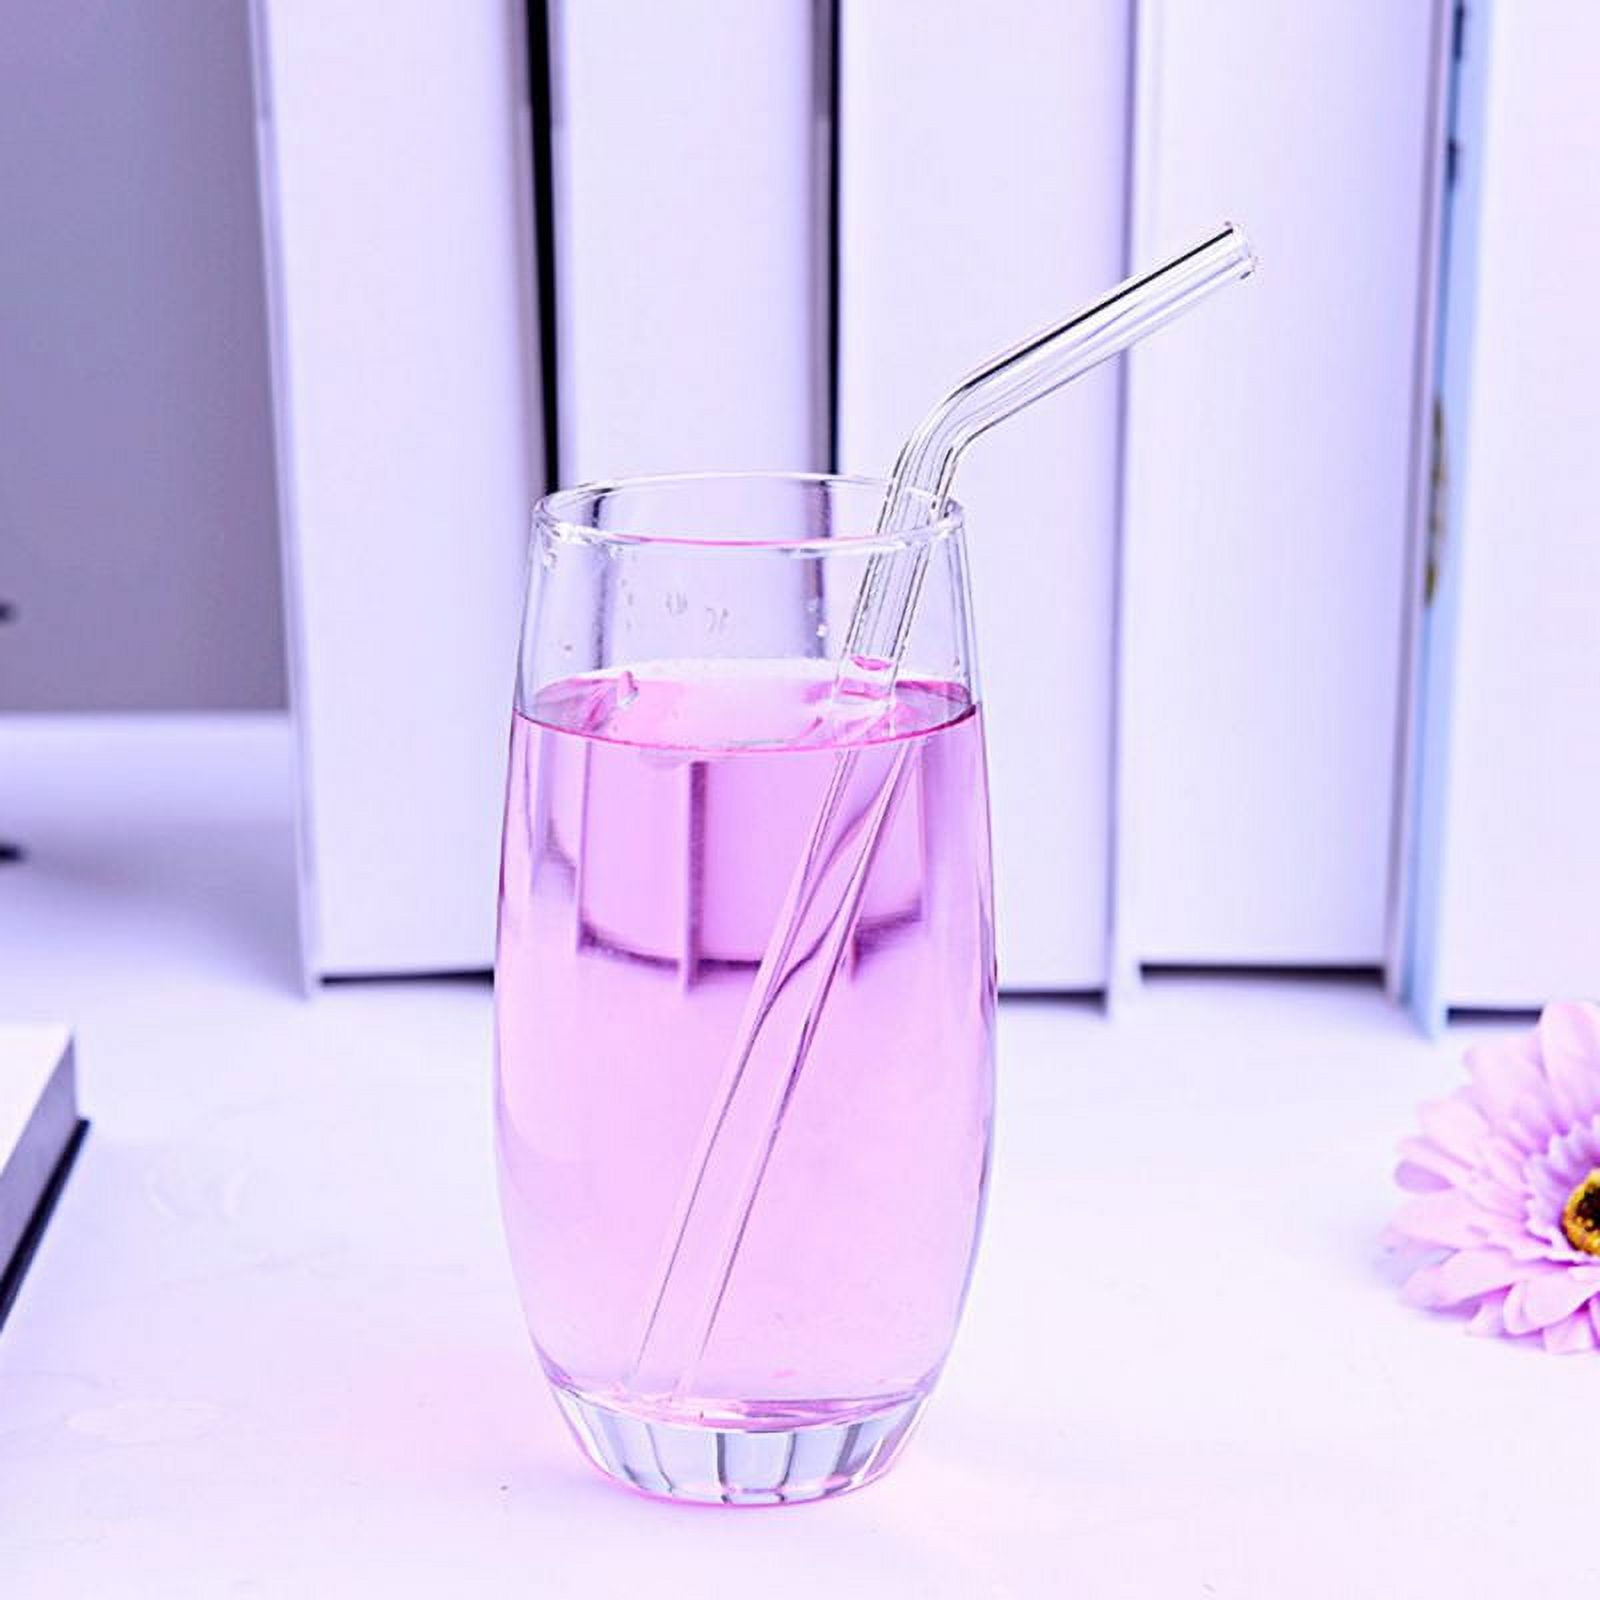 Bee Reusable Glass Drinking Straws, GlassSipper